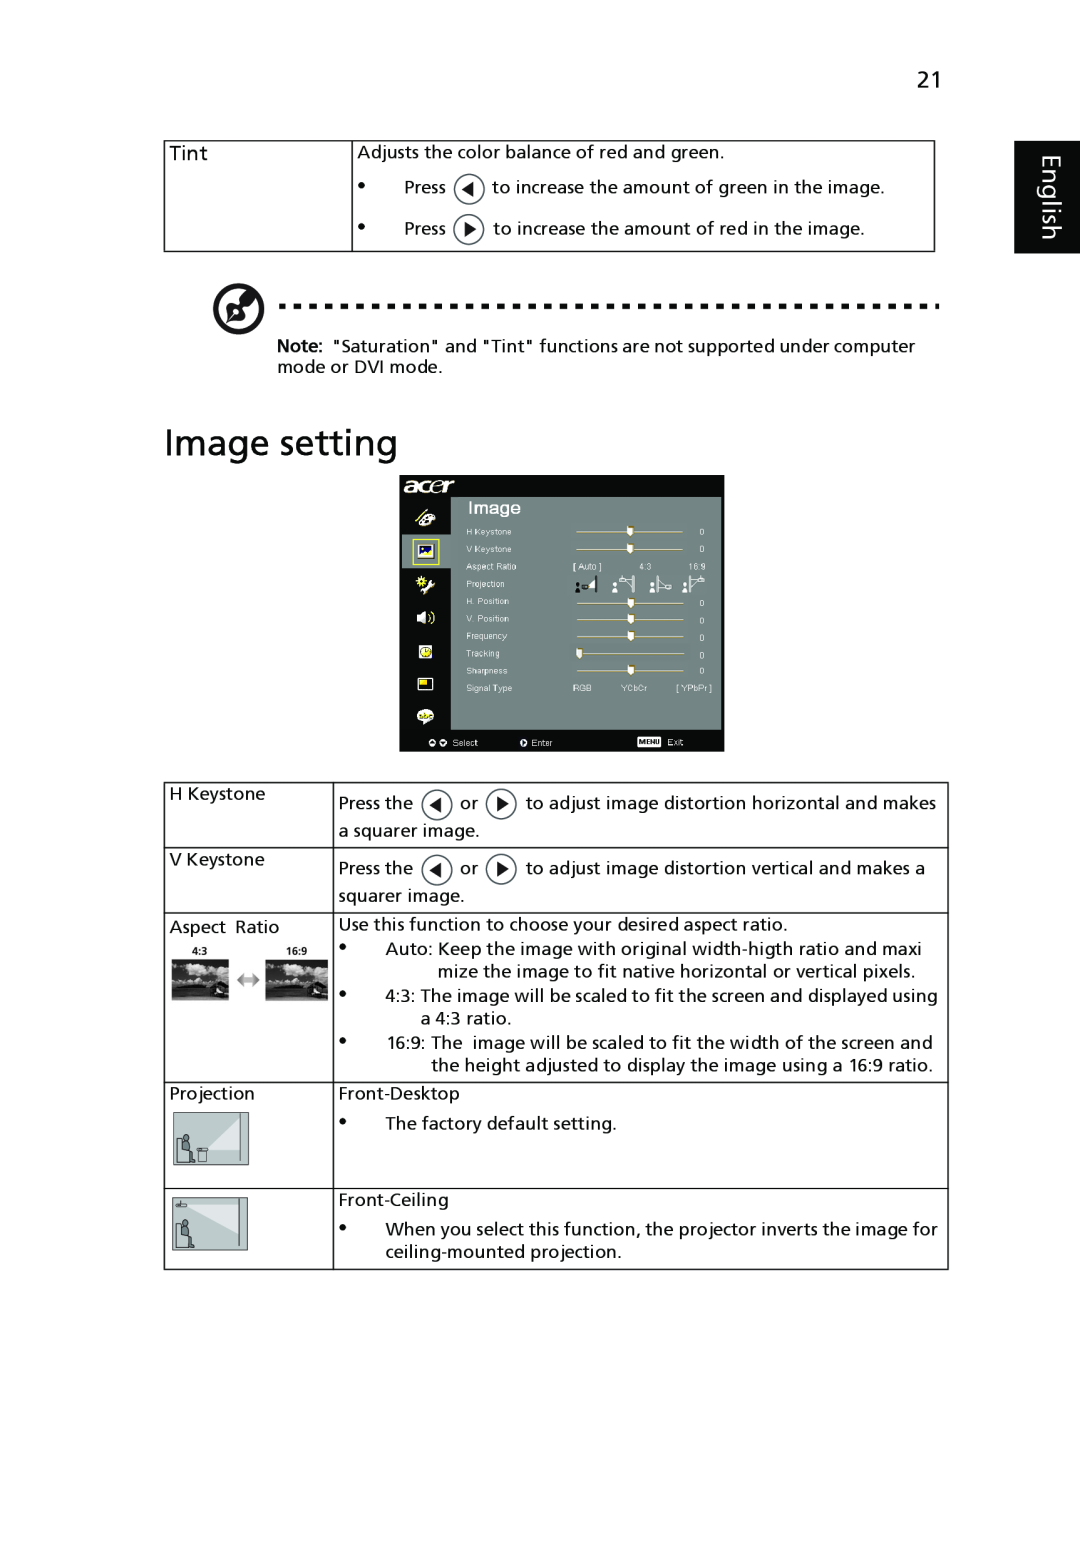 Acer P7280i Series, P7270i manual Image setting, English, Tint 